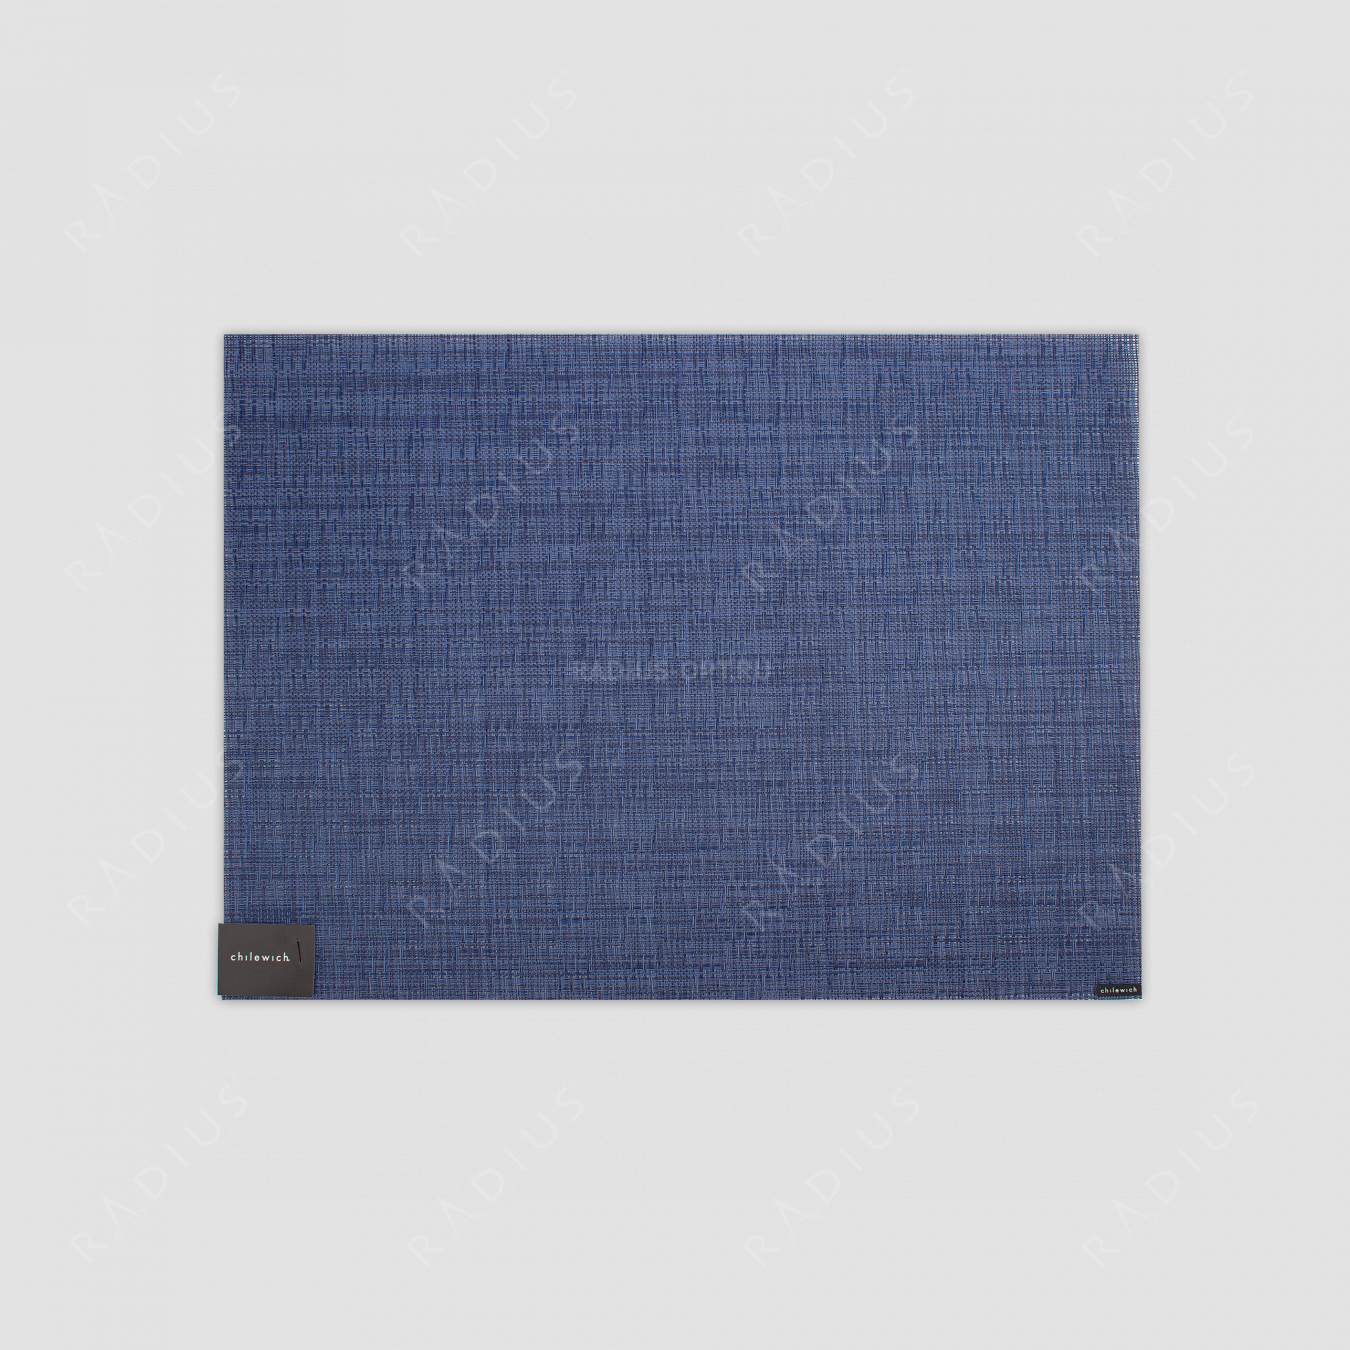 Салфетка подстановочная, винил, размер 36х48 см, Blue Jean, серия Bay Weave, CHILEWICH, США